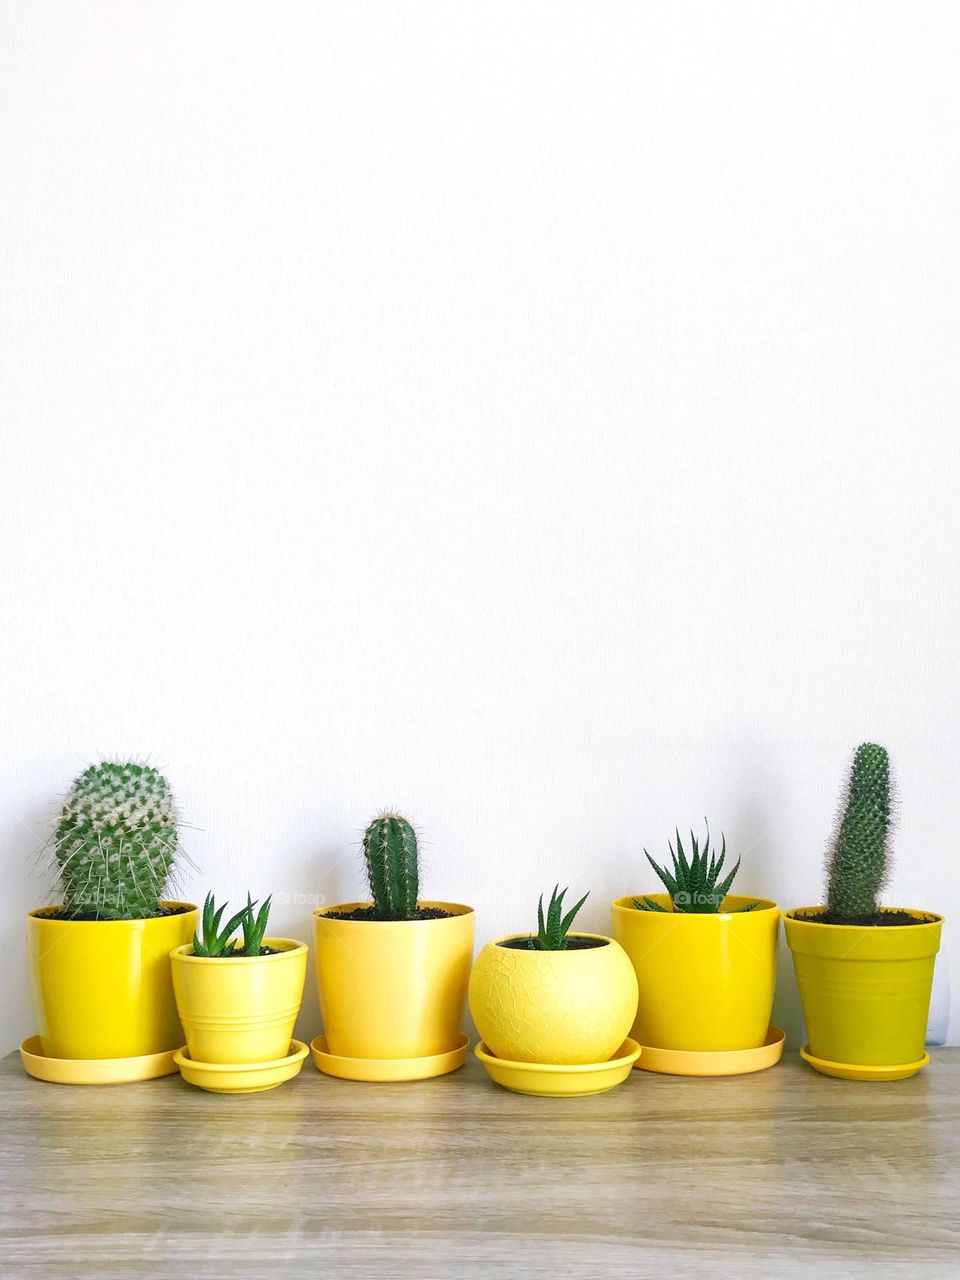 Cacti on yellow pots